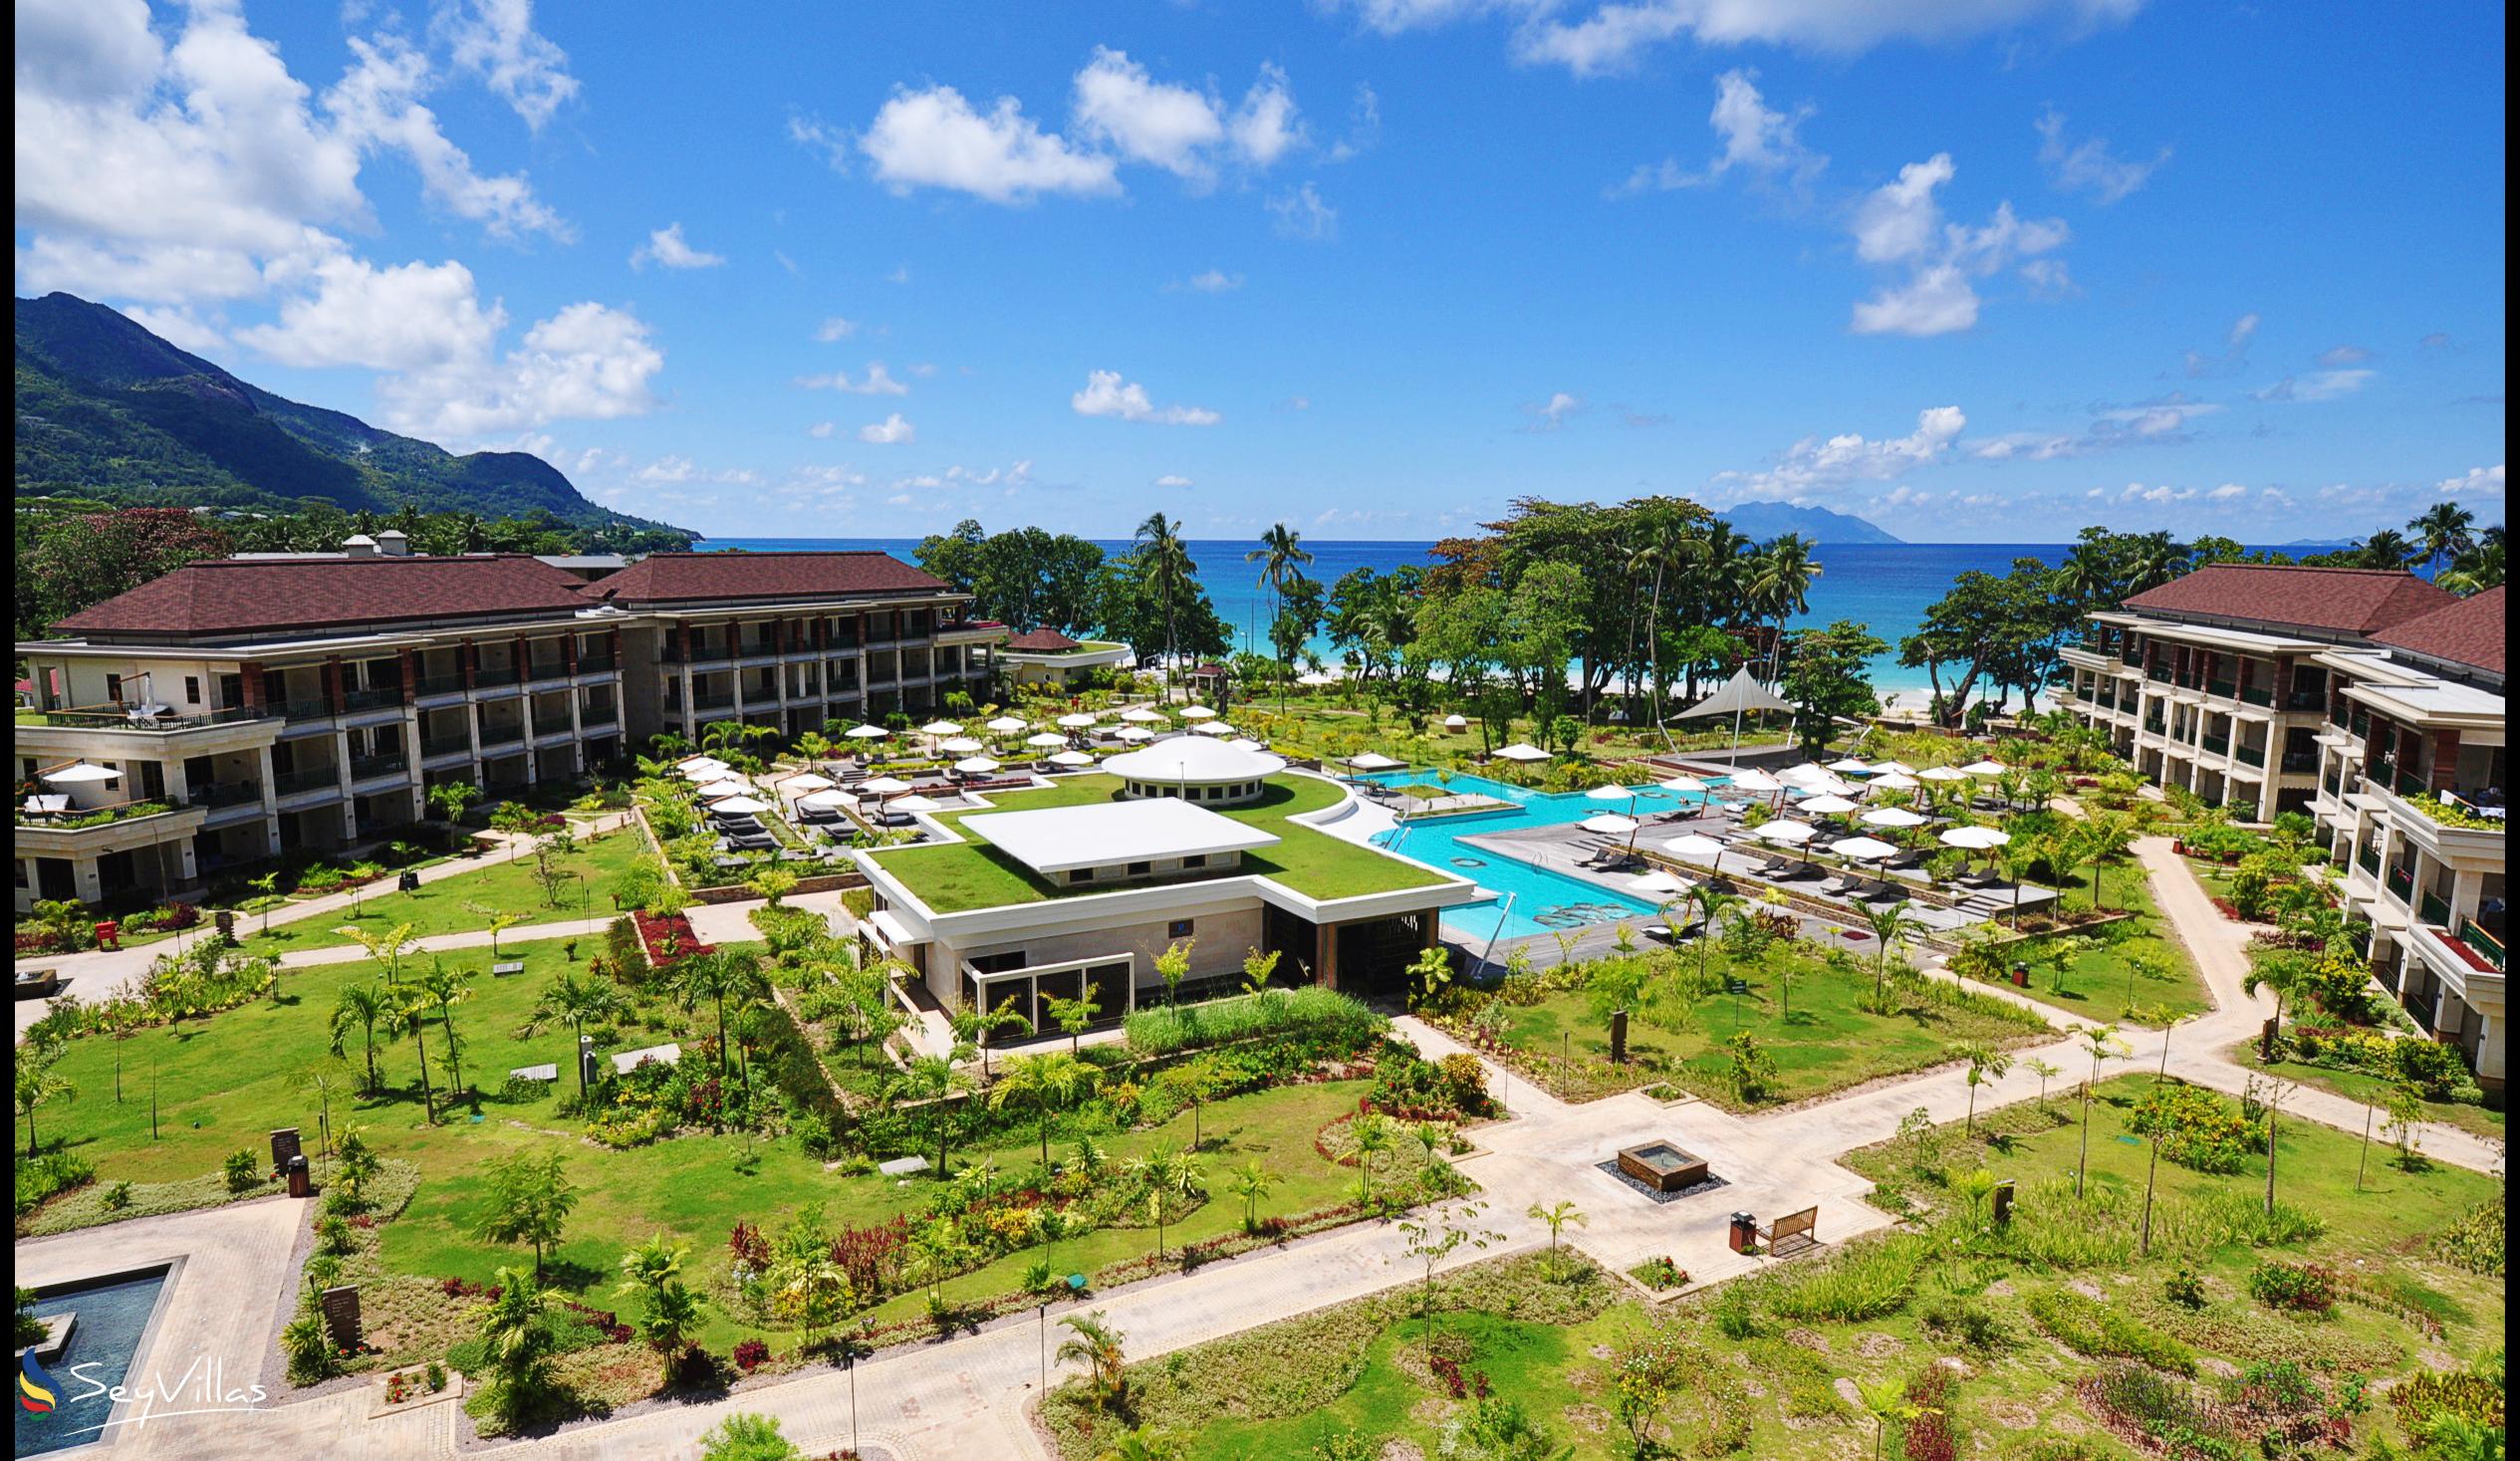 Photo 2: Savoy Resort & Spa - Outdoor area - Mahé (Seychelles)